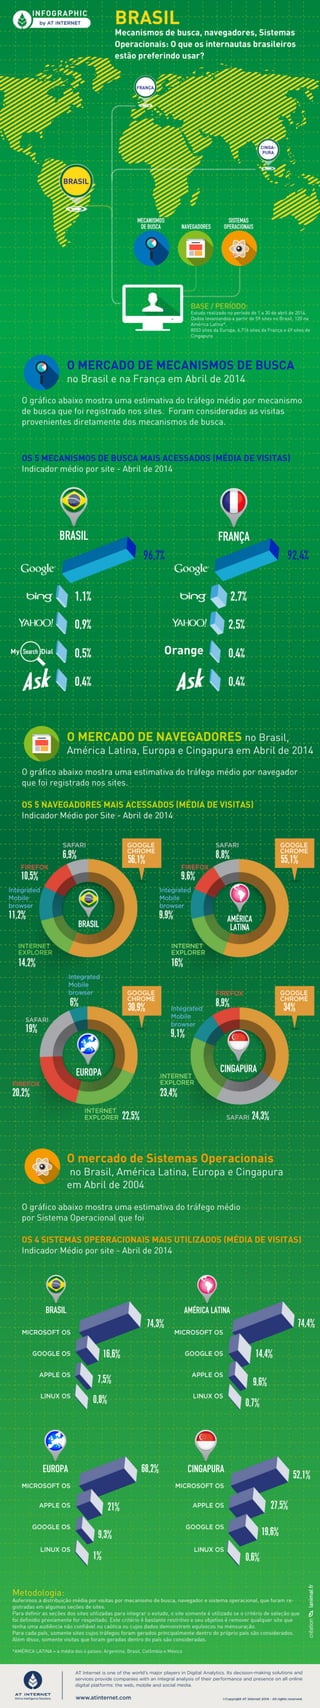 [Infográfico - Abril de 2014] Brasil: Mecanismos de busca, navegadores, Sistemas Operacionais